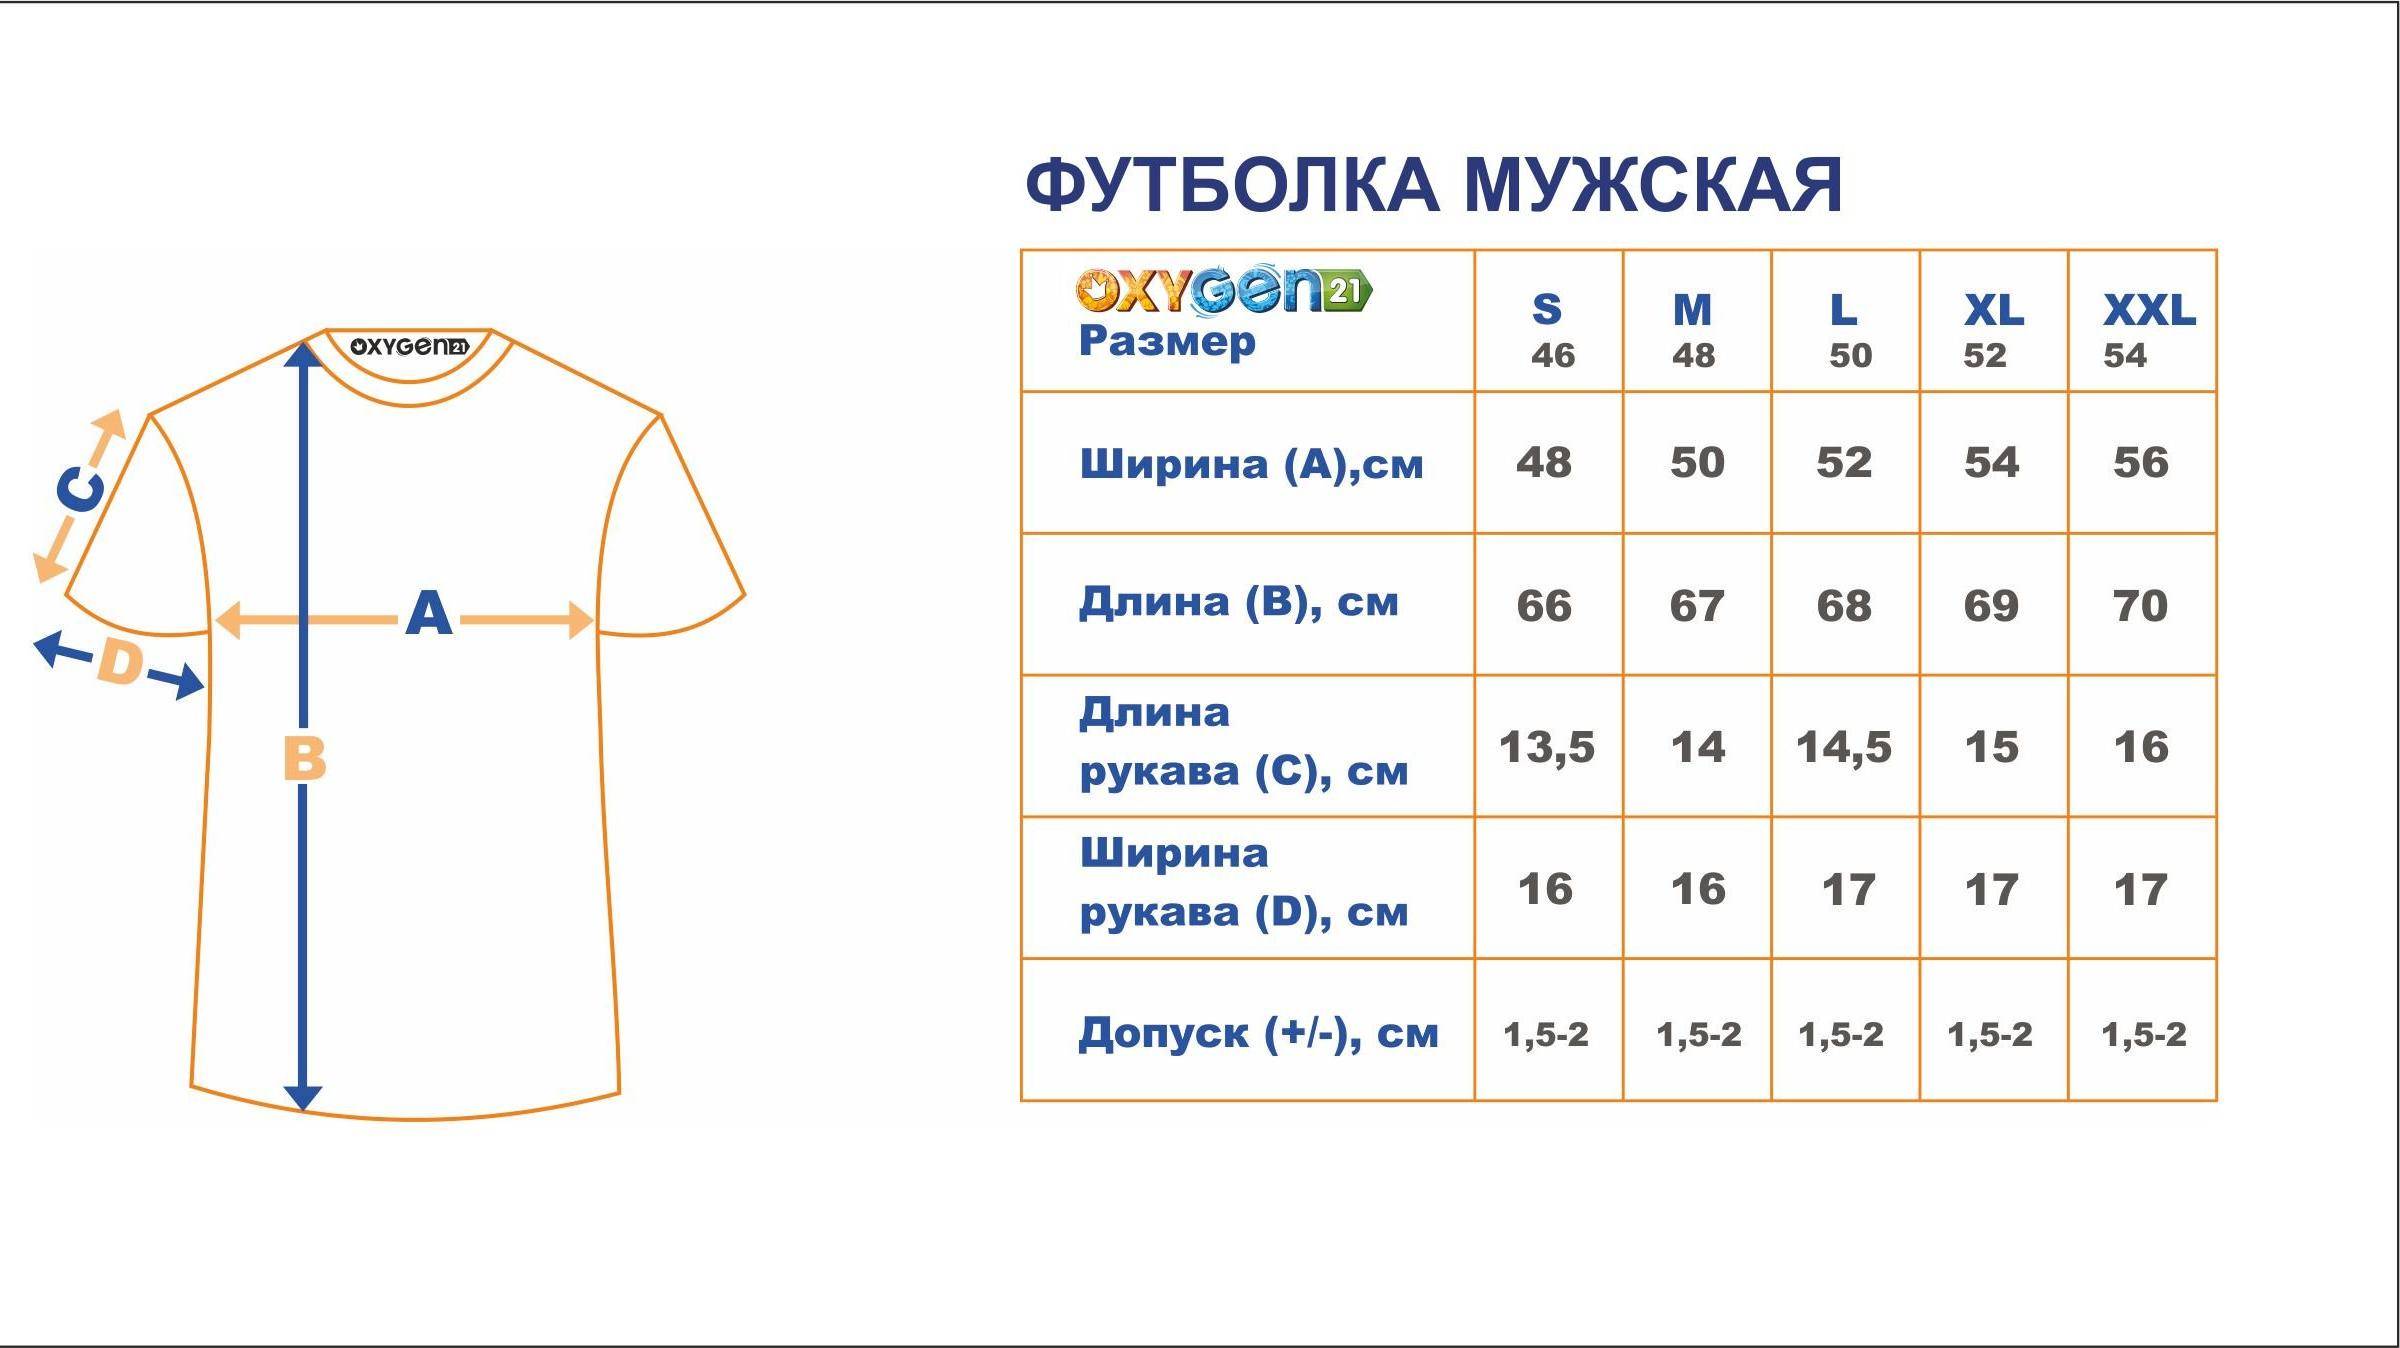 Футболки мужские 60 размер. Размерная таблица одежды для мужчин футболки. Сетка размеров футболок. Размеры футболок мужских. Размерная сетка футболок мужских.